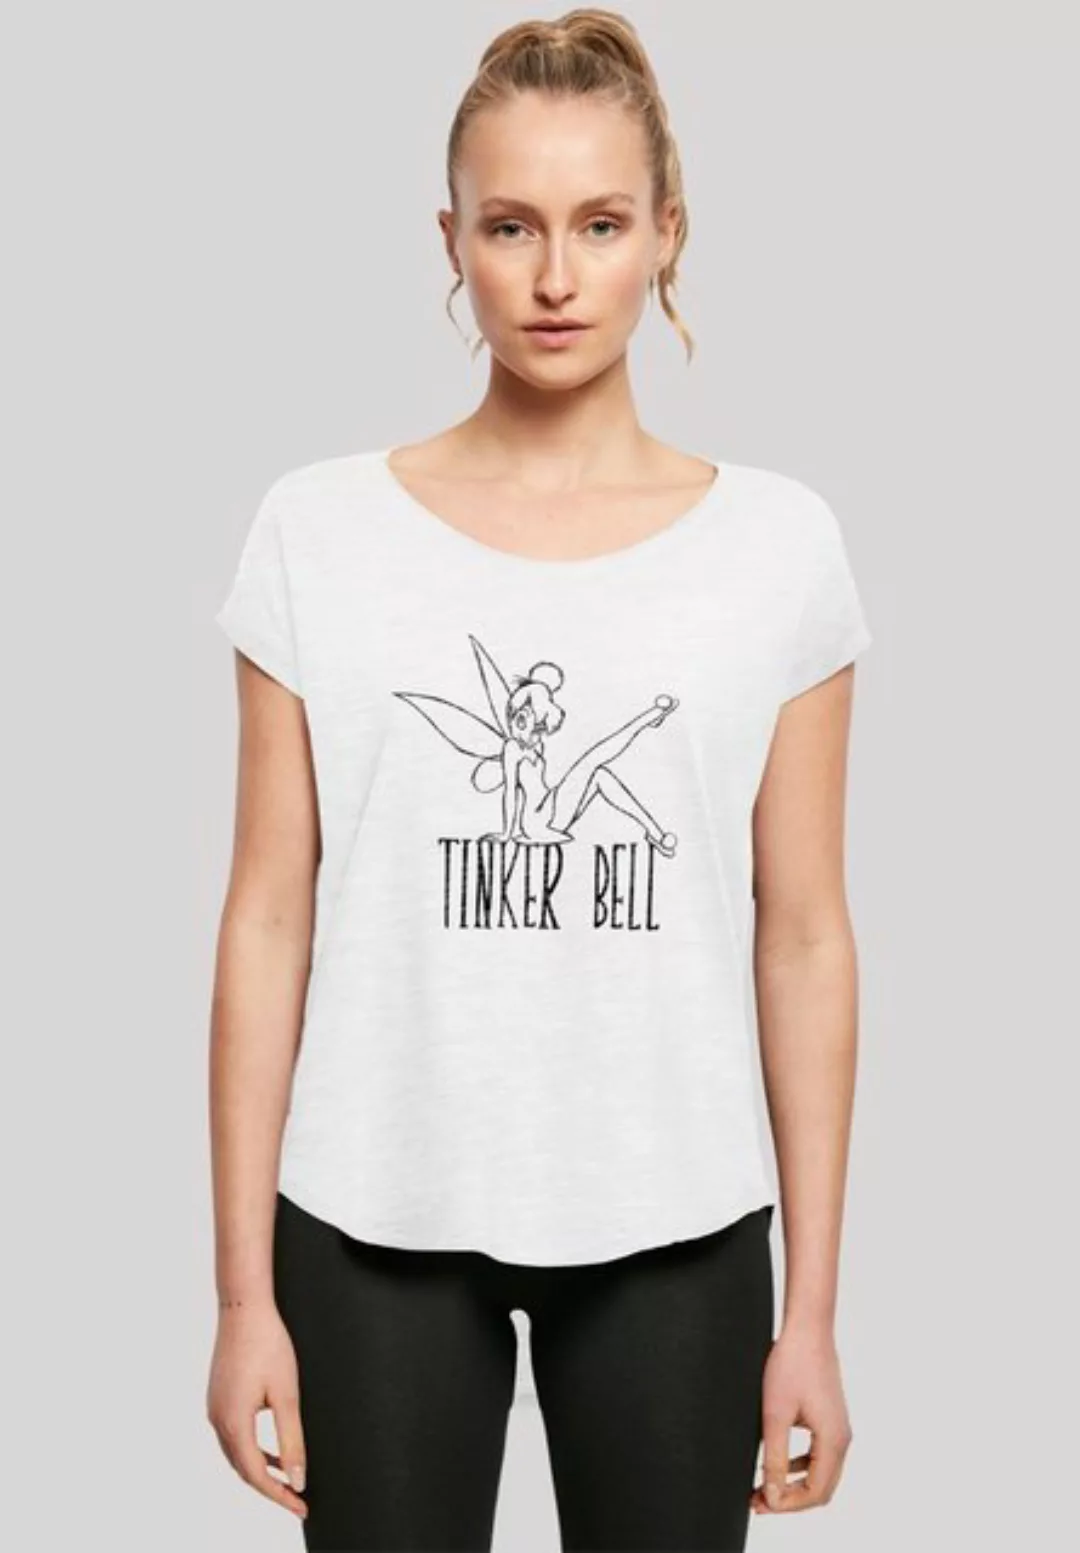 F4NT4STIC T-Shirt Disney Peter Pan Pose Premium Qualität günstig online kaufen